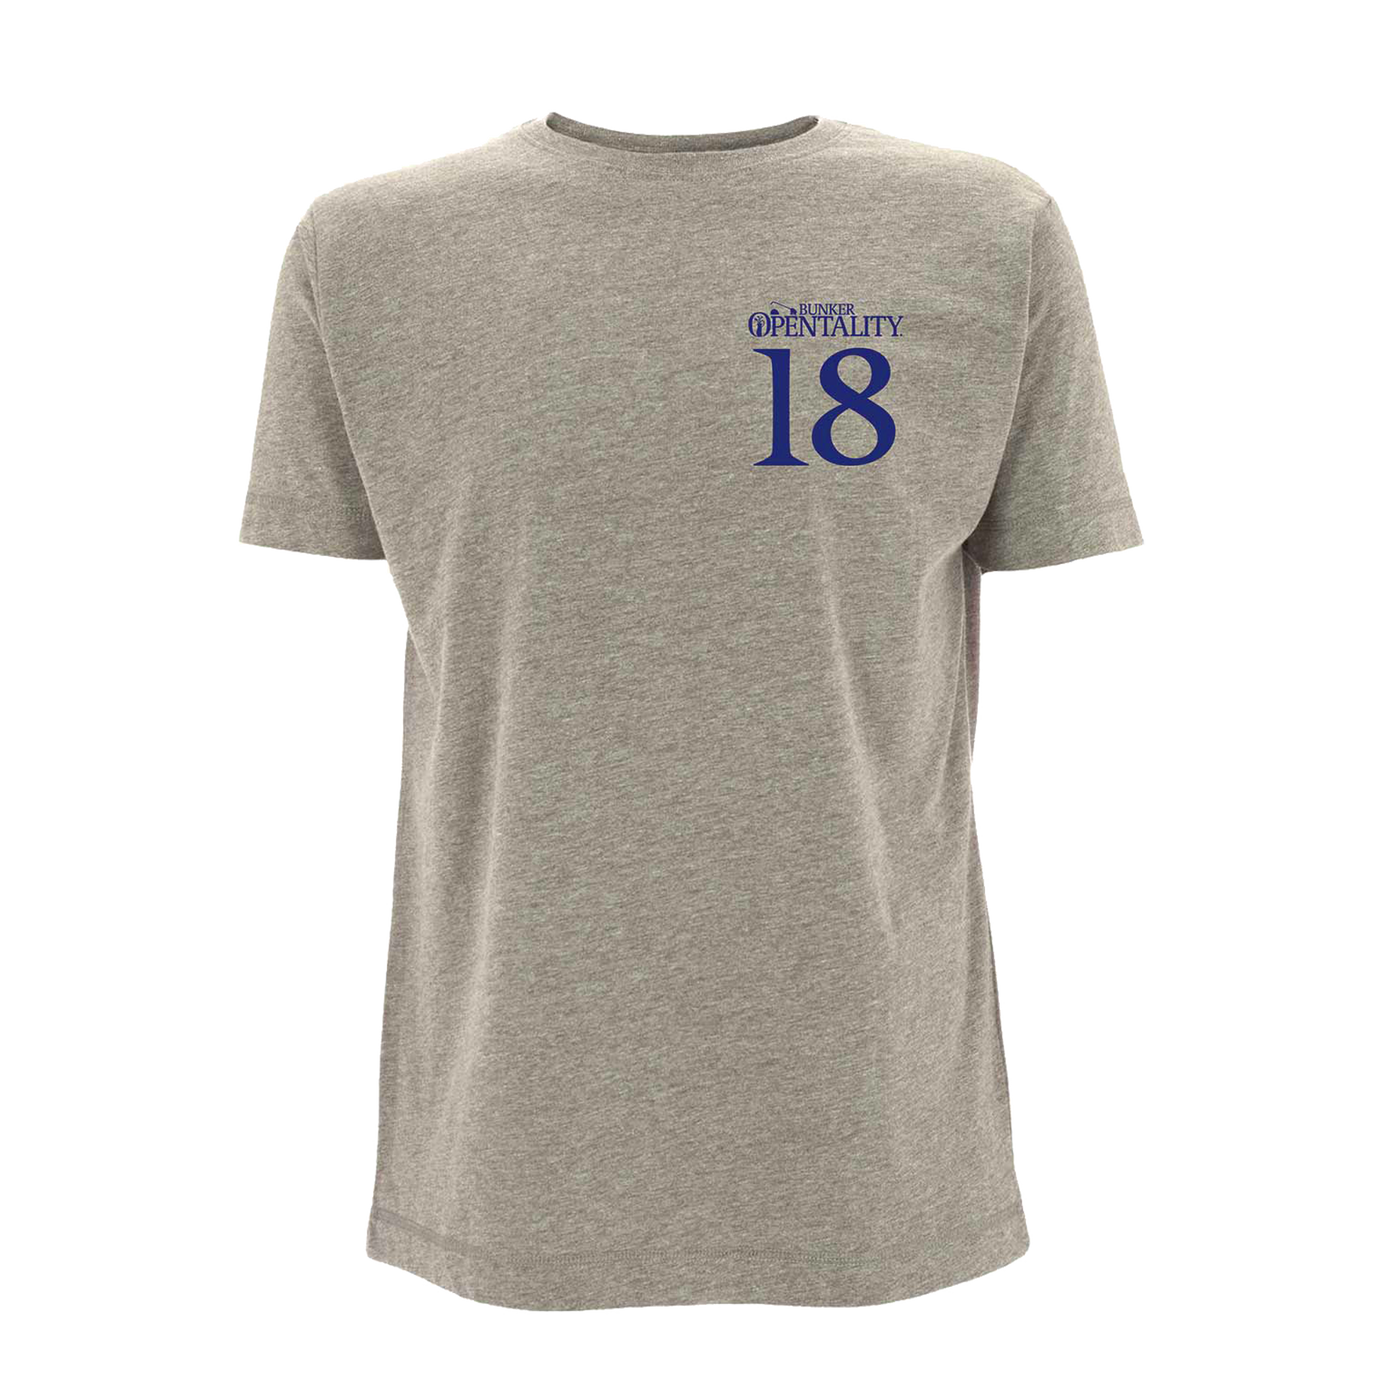 The 18th, T Shirt - Grey Marl